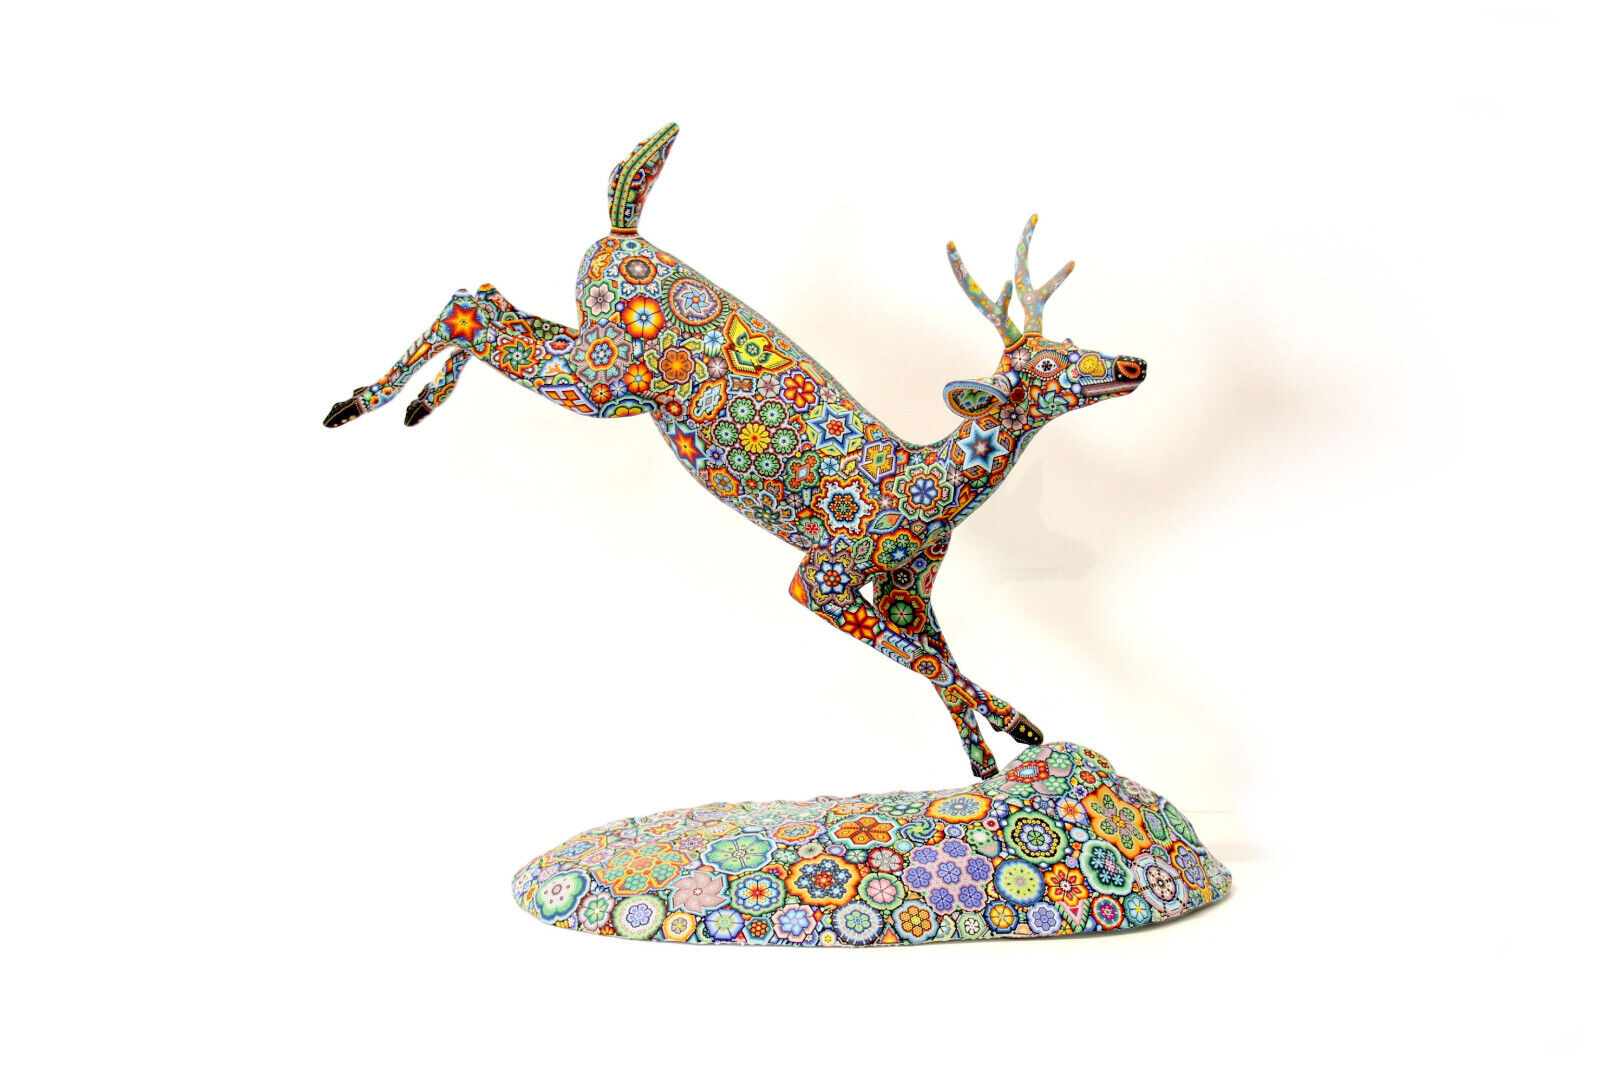 Huichol Art Sculpture Jumping Deer Maxa utsik+kame 4.6 in. | Beads artwork